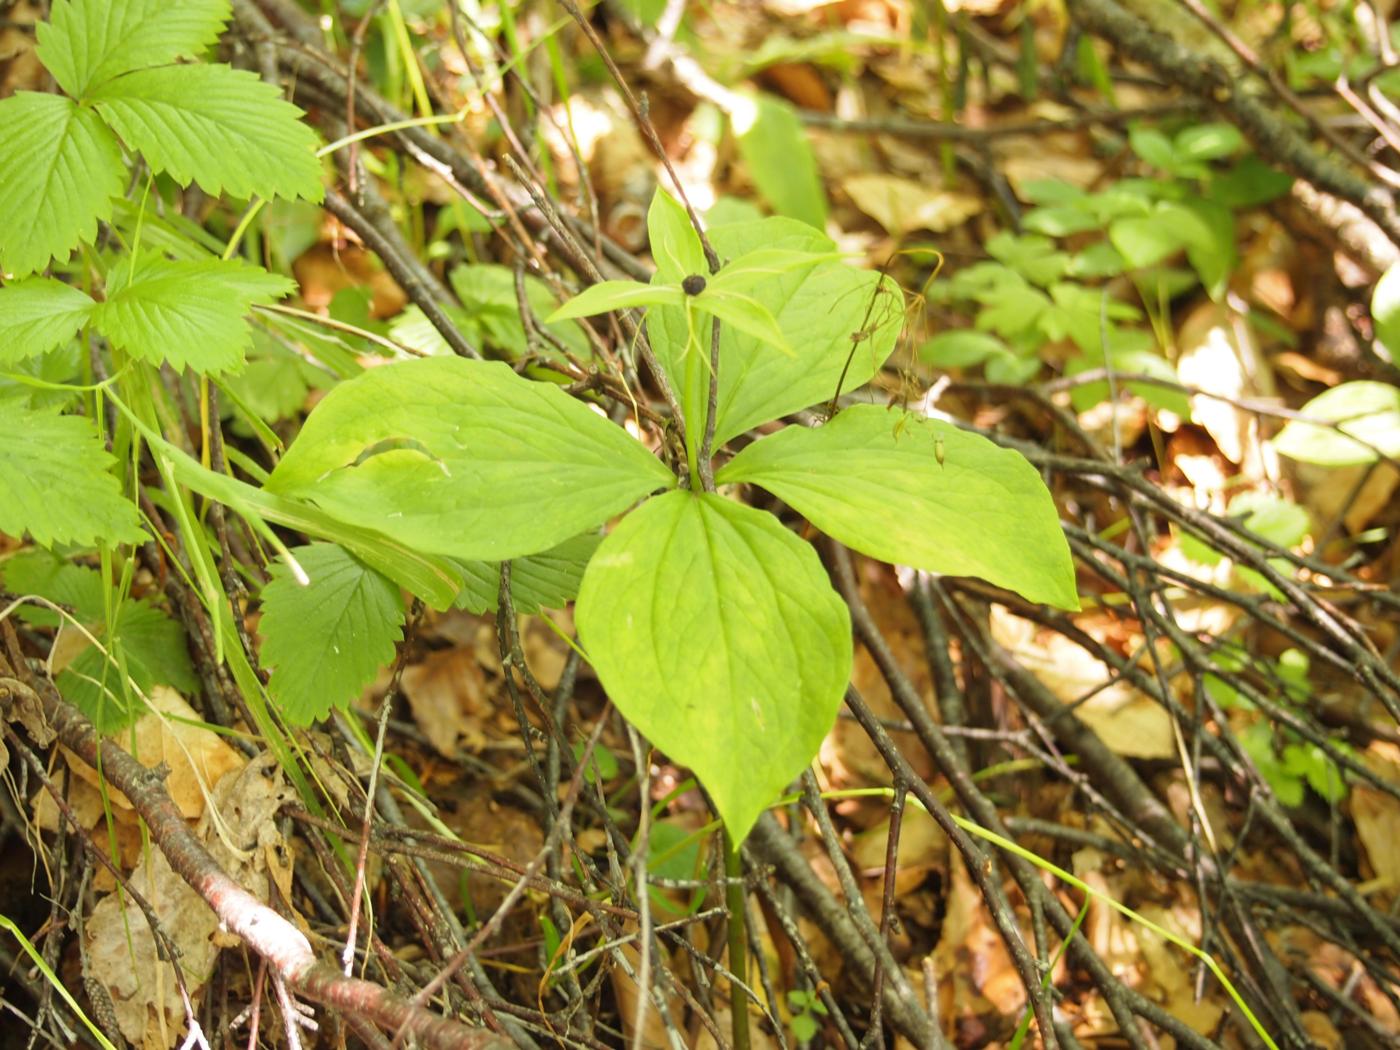 Herb Paris, True Love-knot leaf